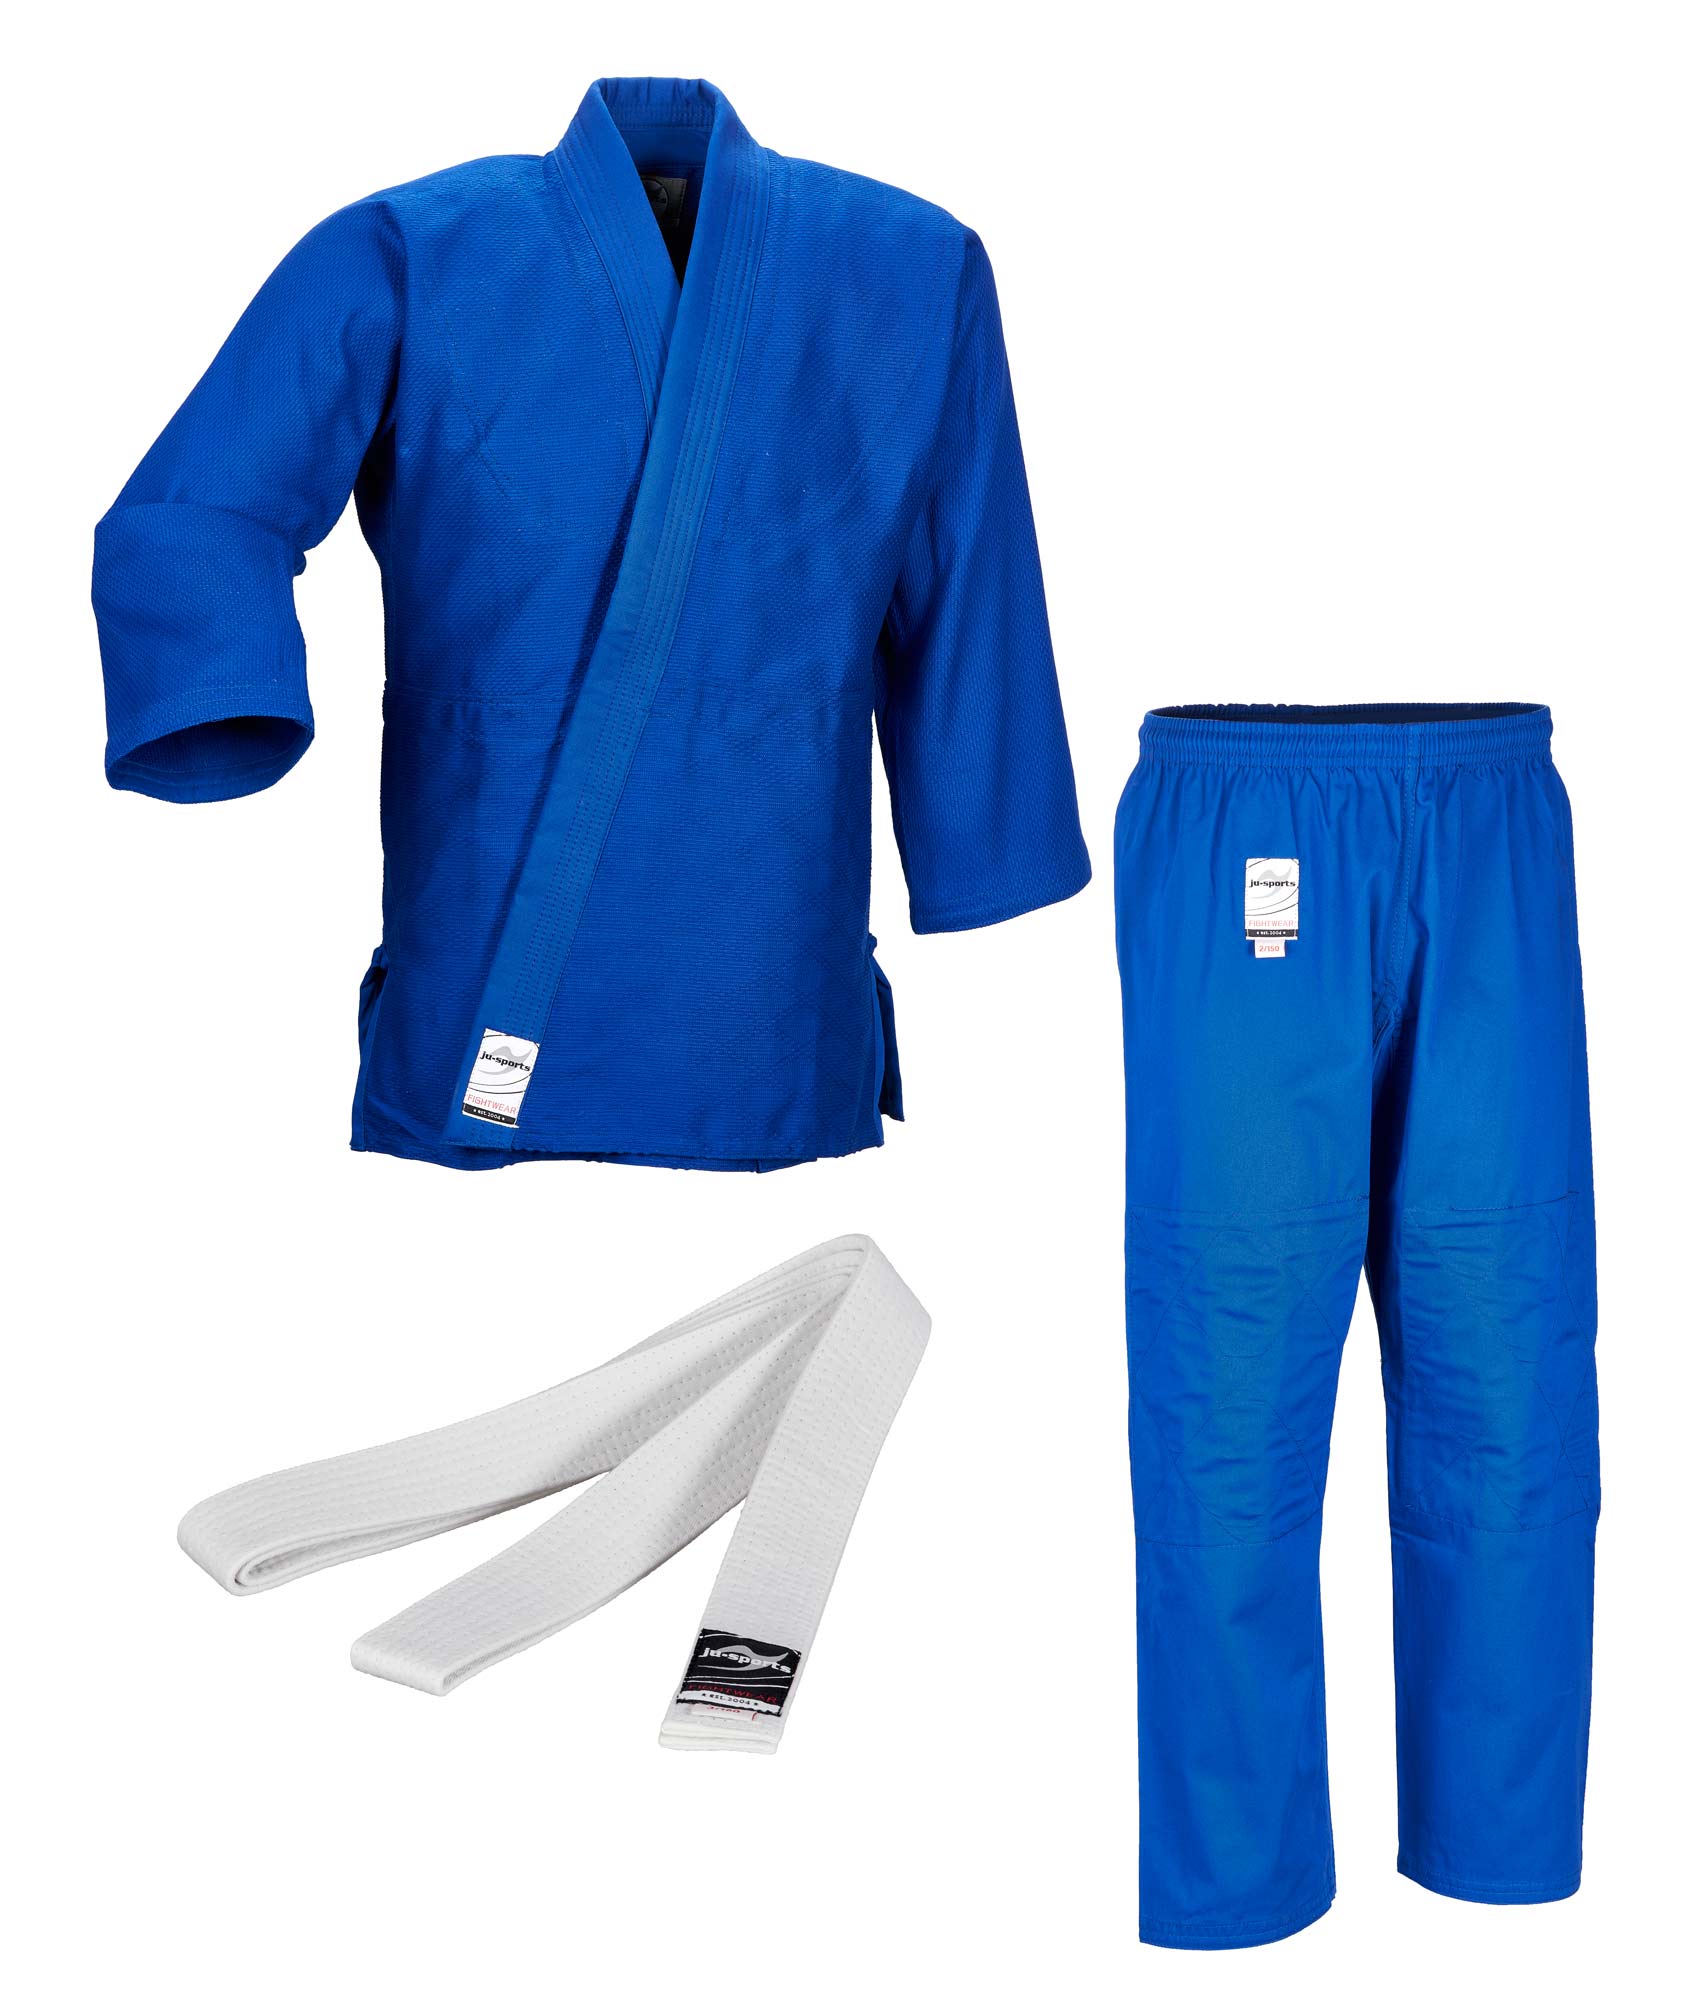 Ju-Sports Judo Gi "to start" blue